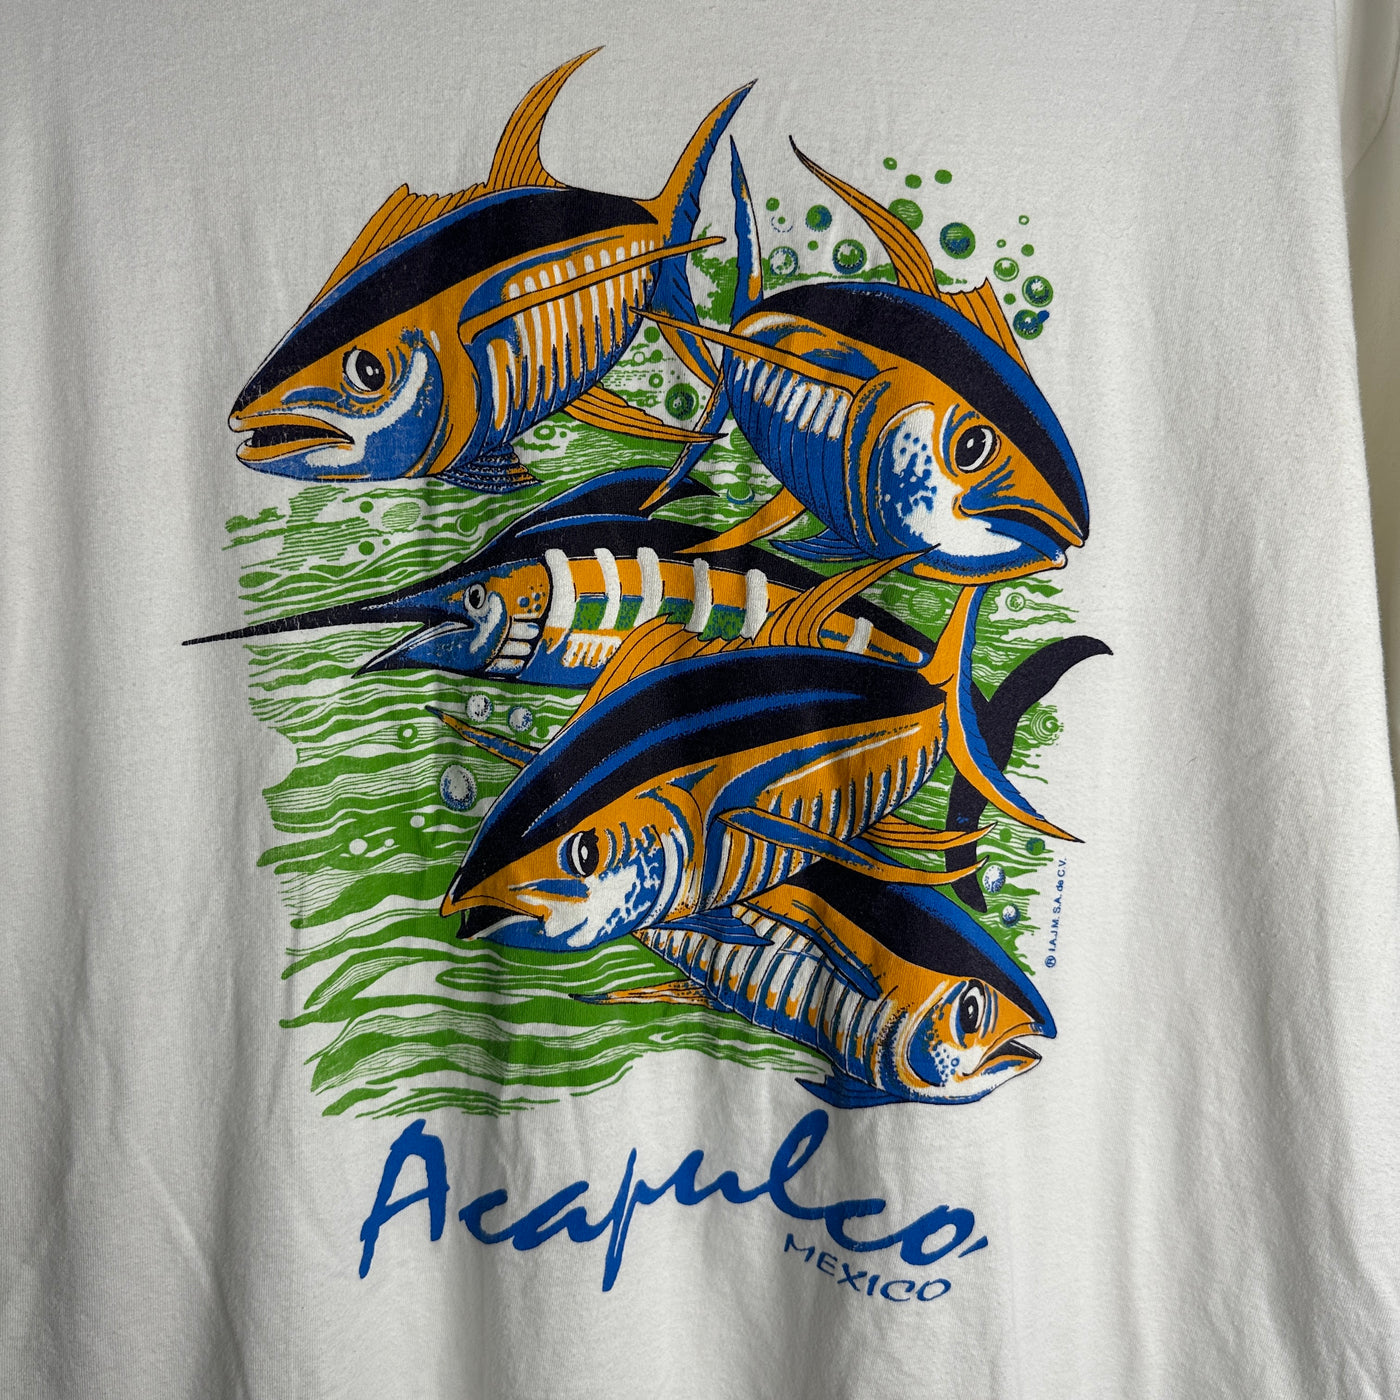 90's Acapulco Mexico Tuna Fish Graphic T-shirt sz 2XL